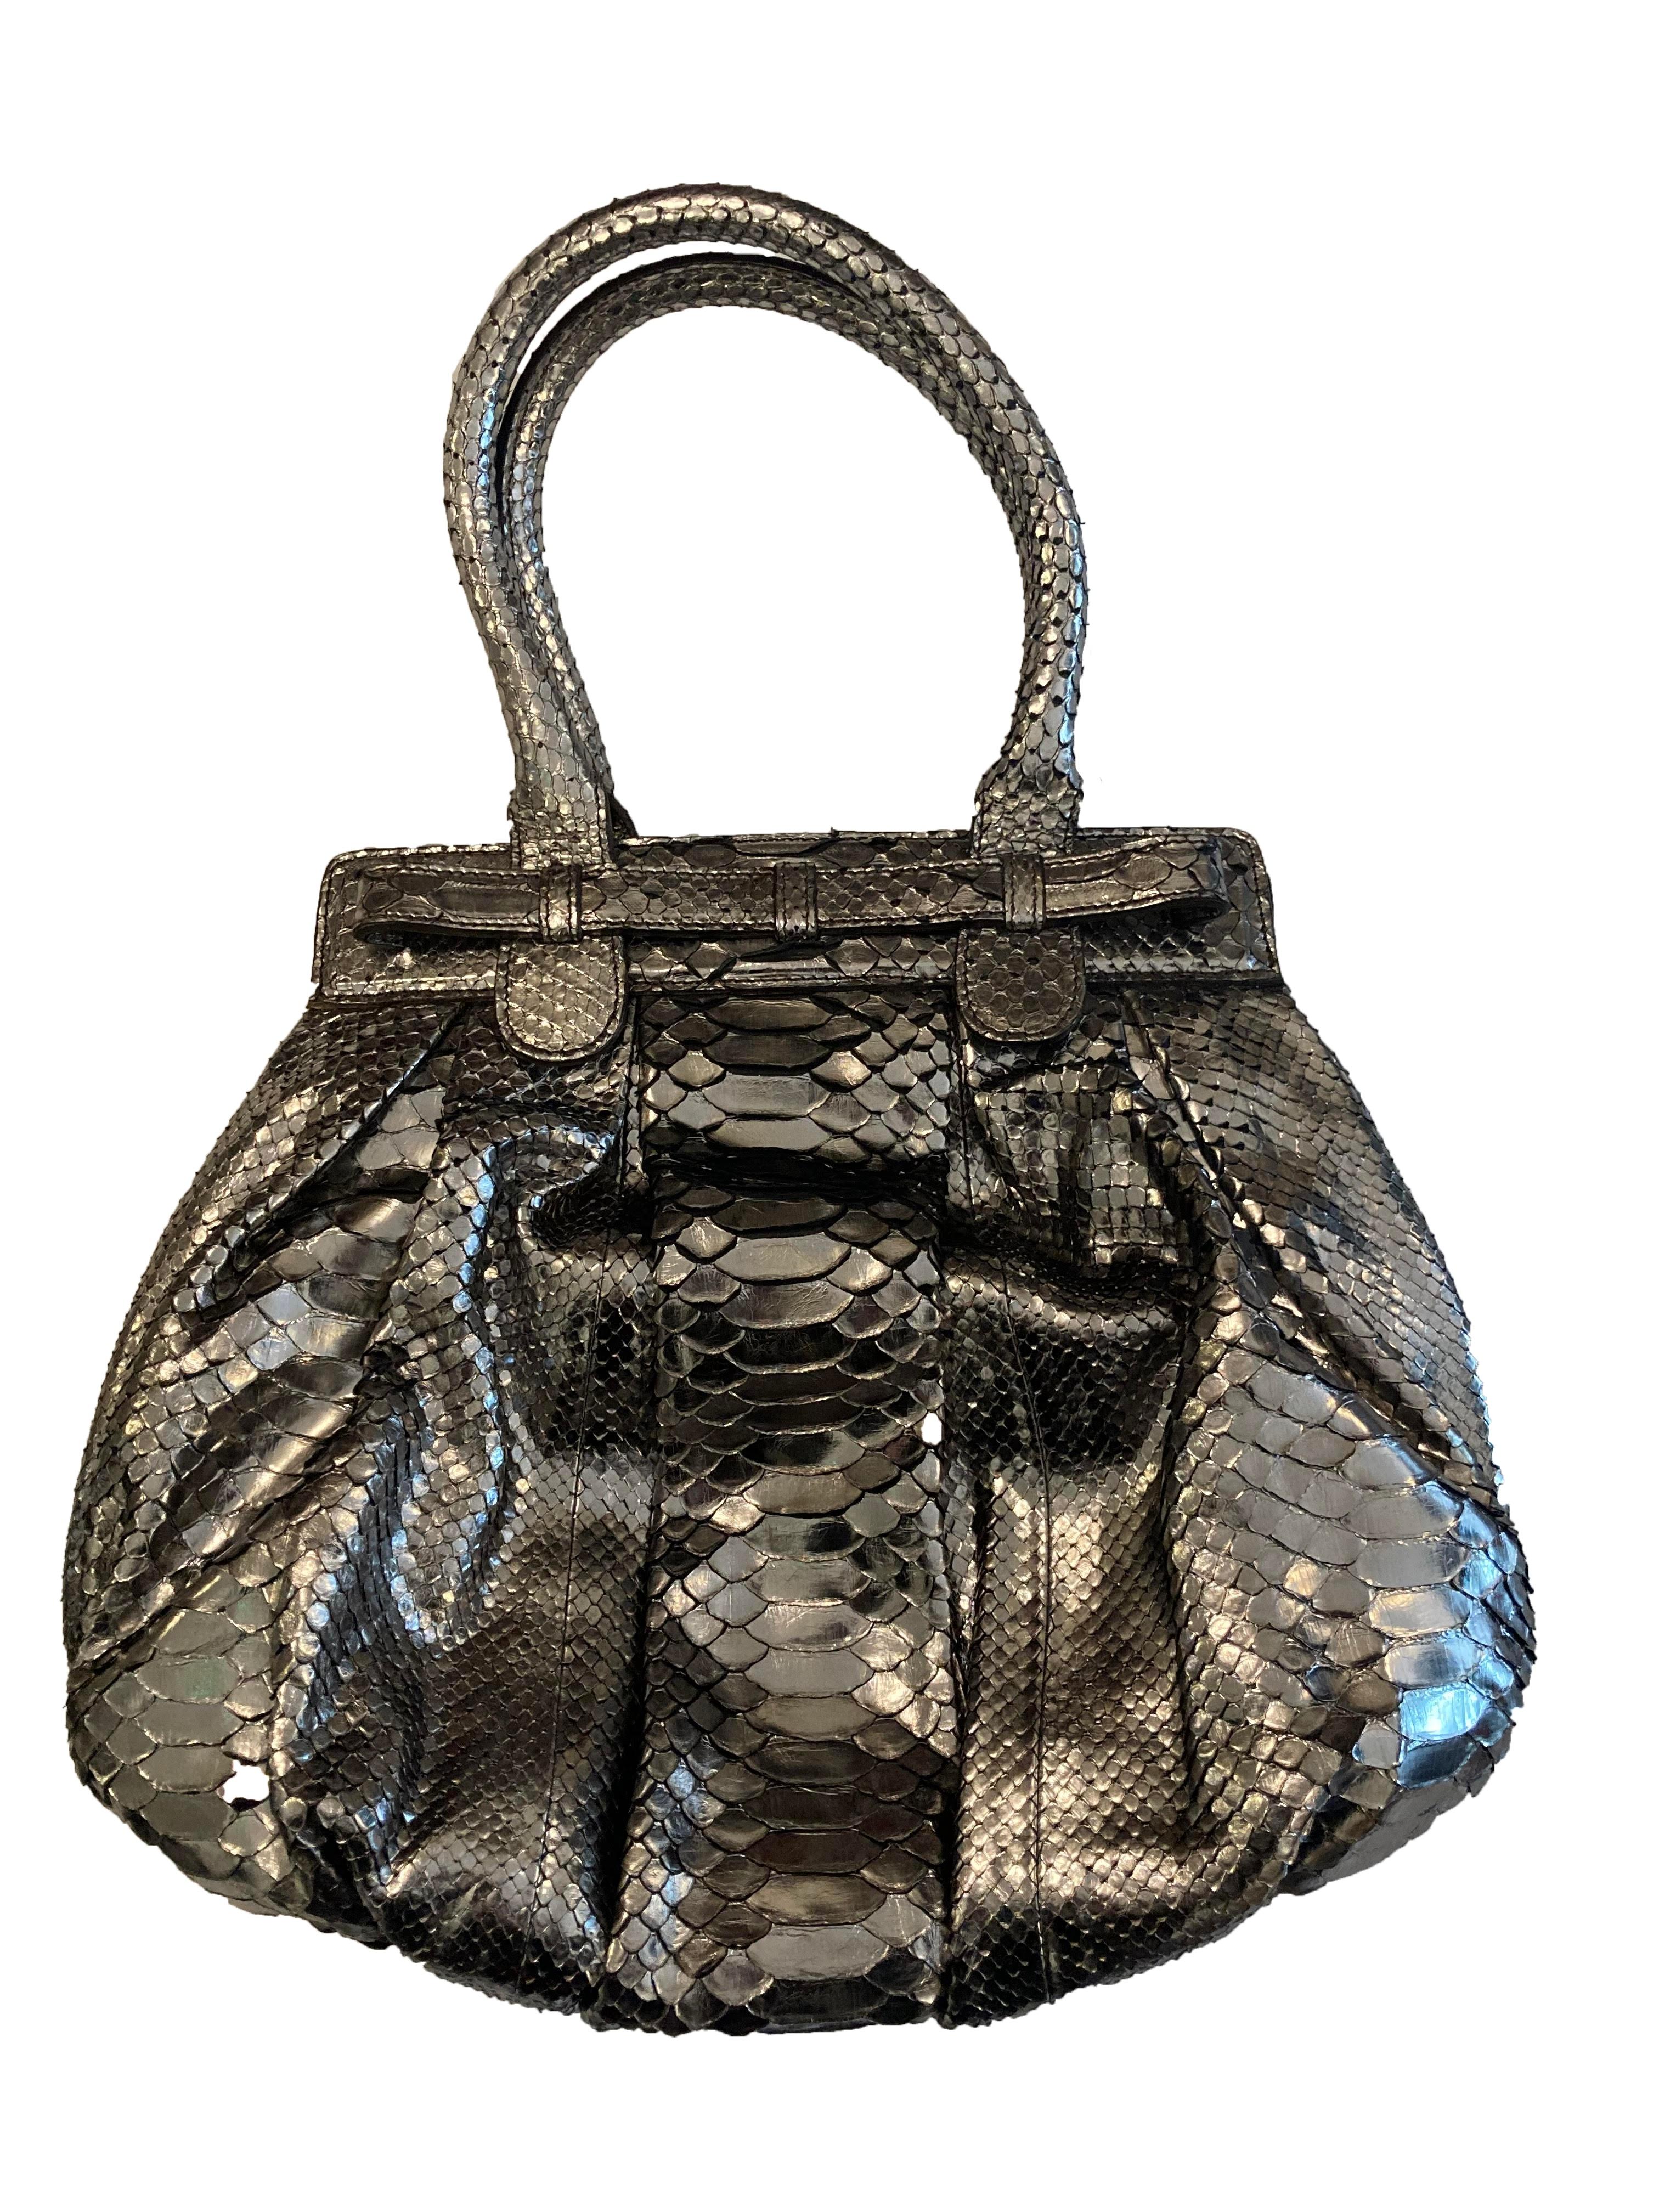 Zagliani Metallic Python Bag For Sale 2